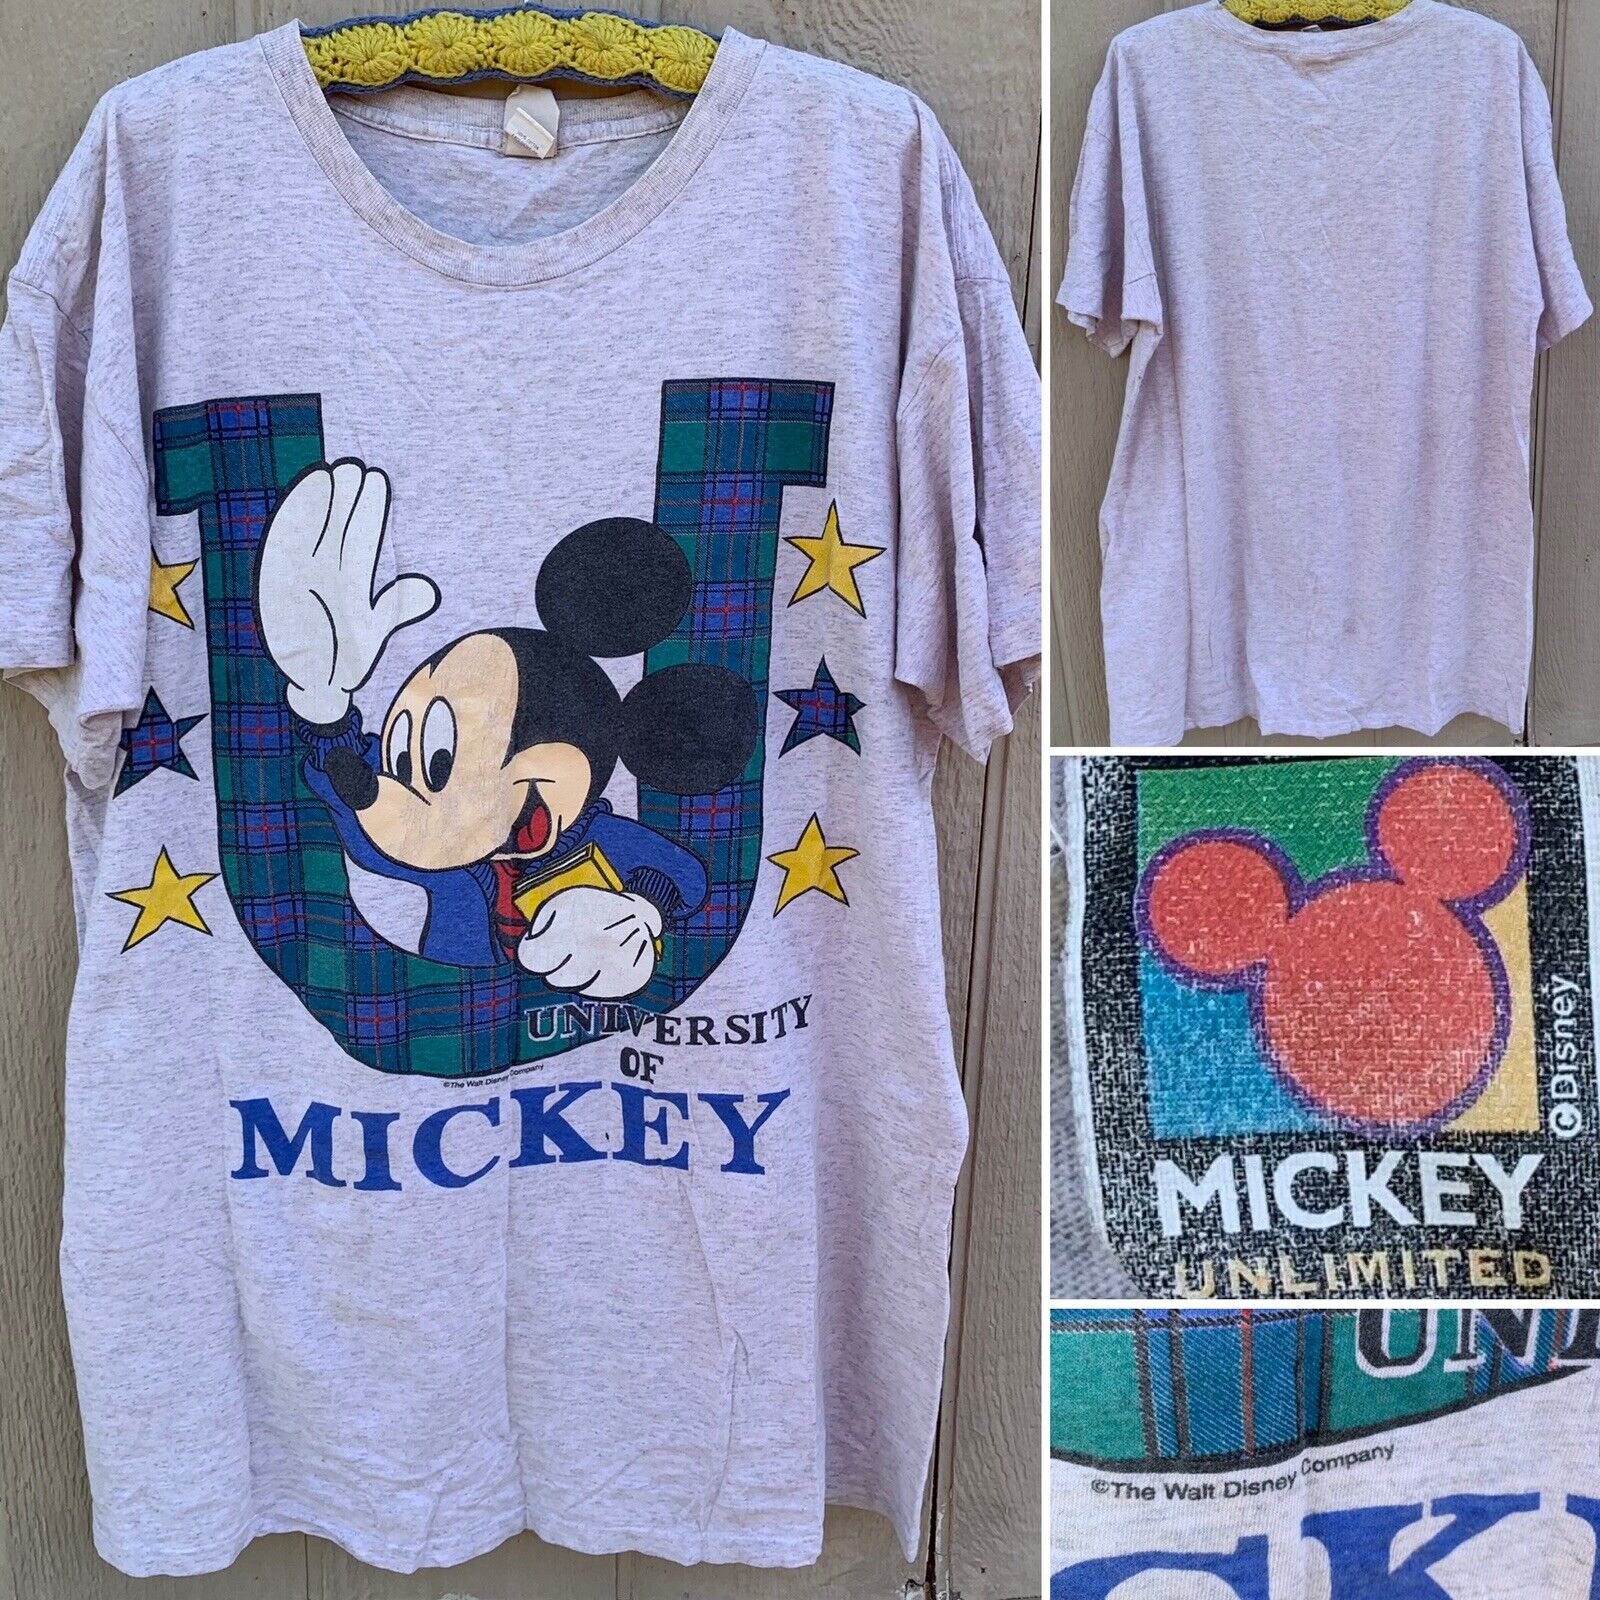 vintage University of Mickey t-shirt single stitch one size fits all sleep shirt